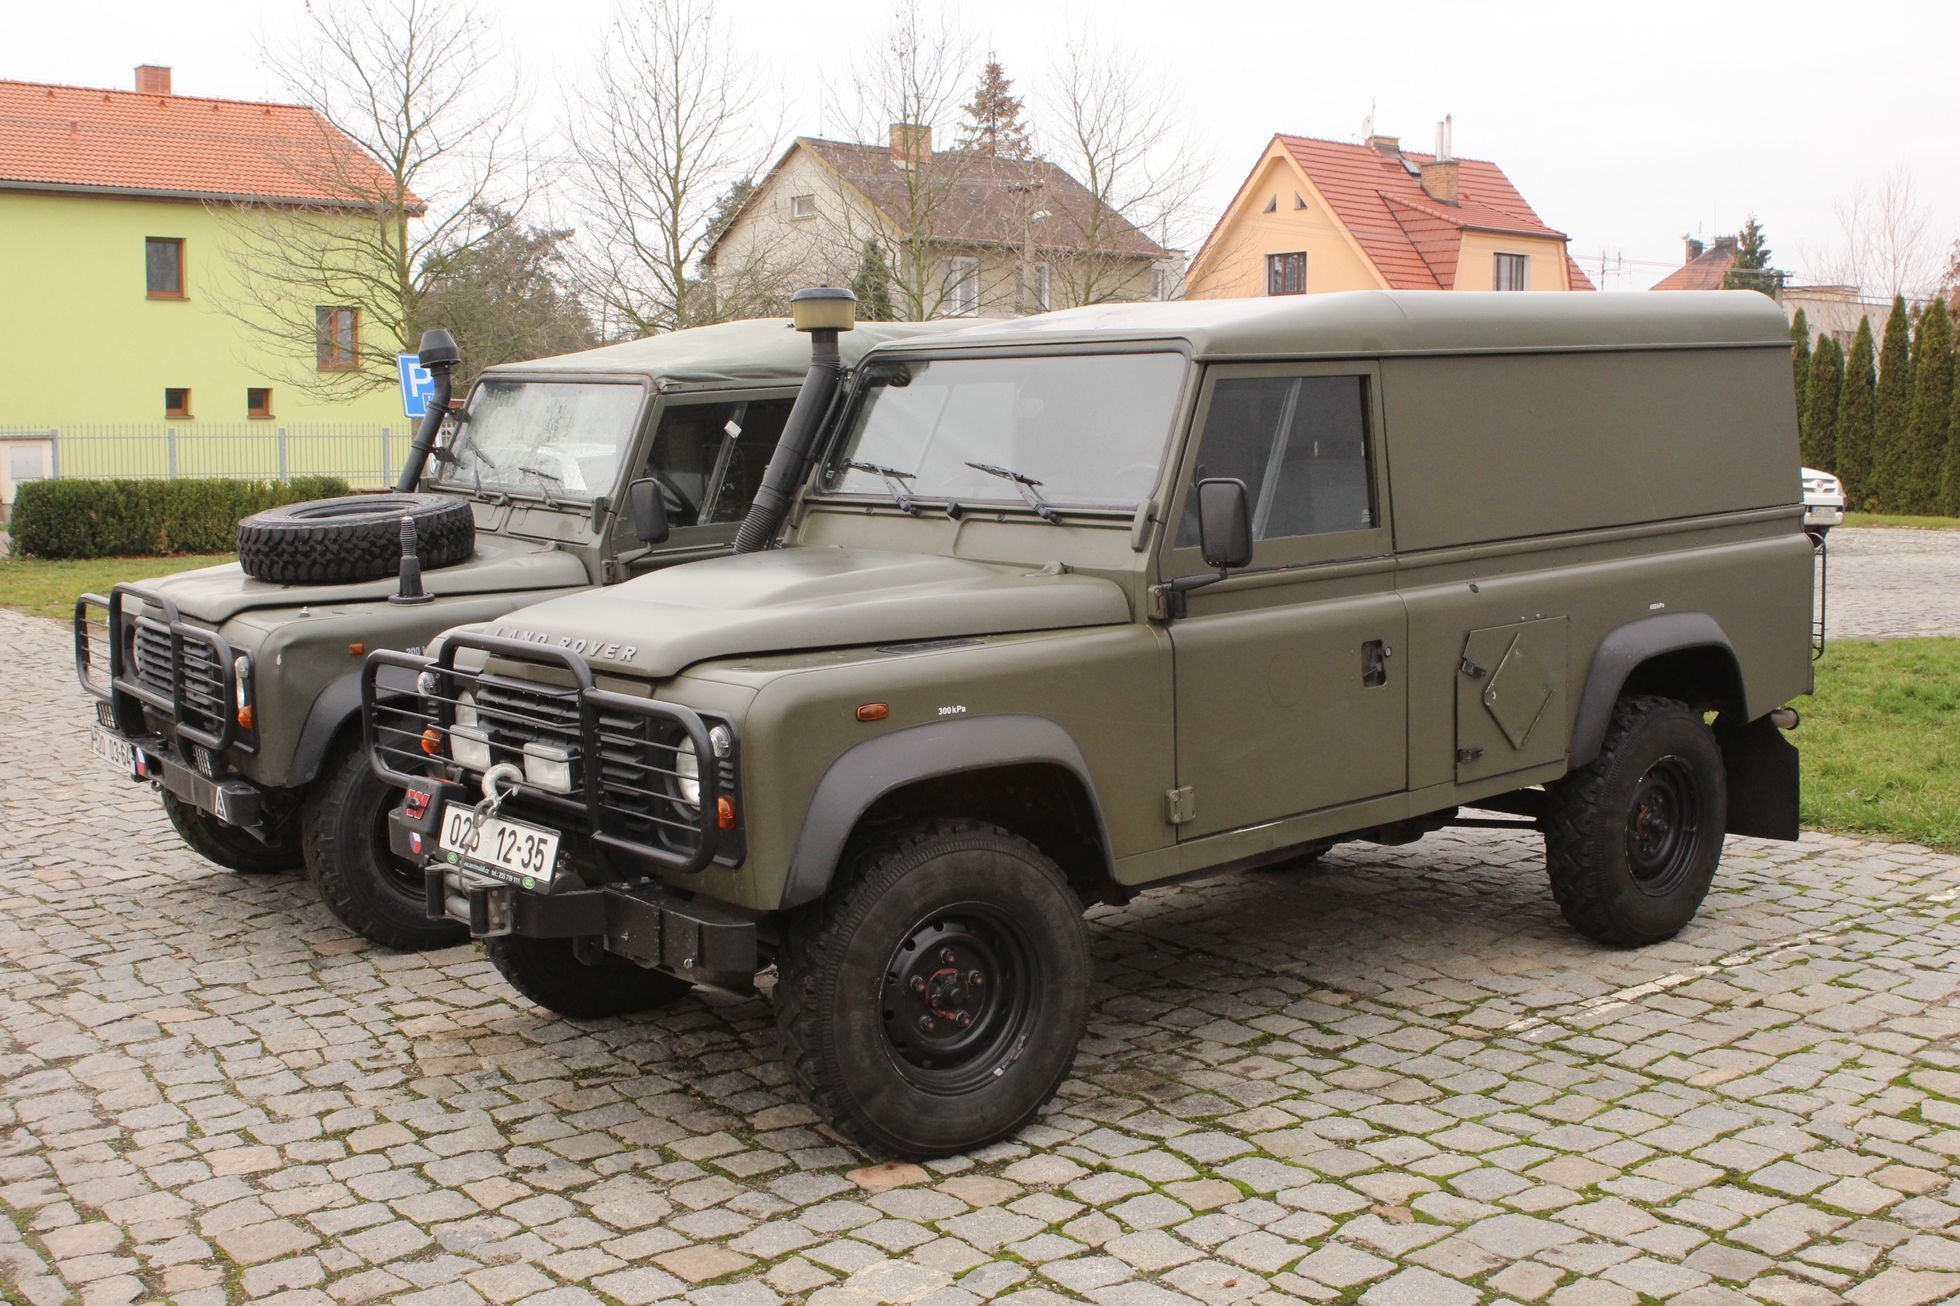 Land Rover Defender - 44 IMG_2731 defendery pro českou armádu